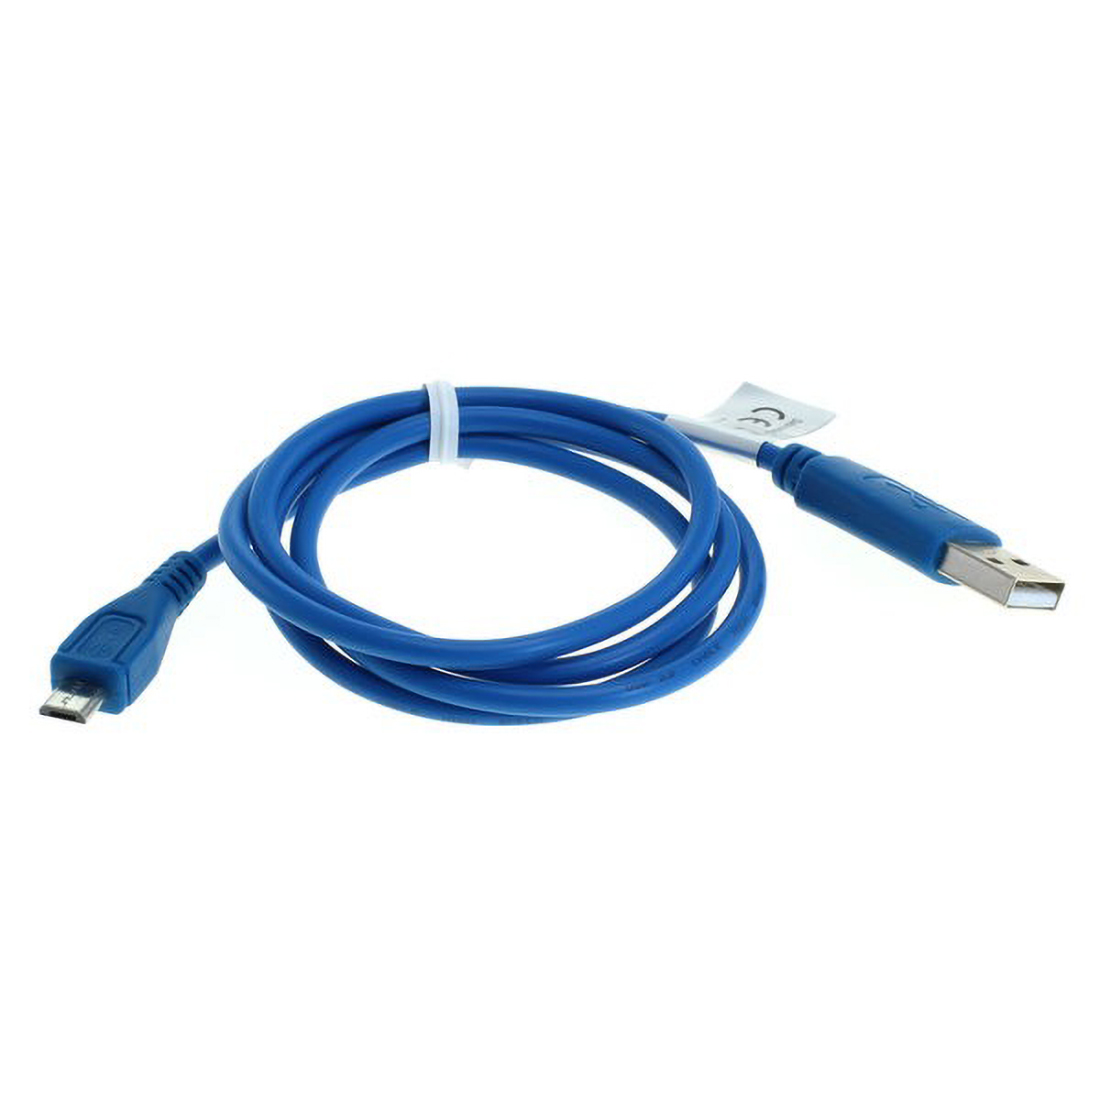 Sony, blau USB-Datenkabel Kabel Sony sonstige mit DSC-WX220 MOBILOTEC kompatibel